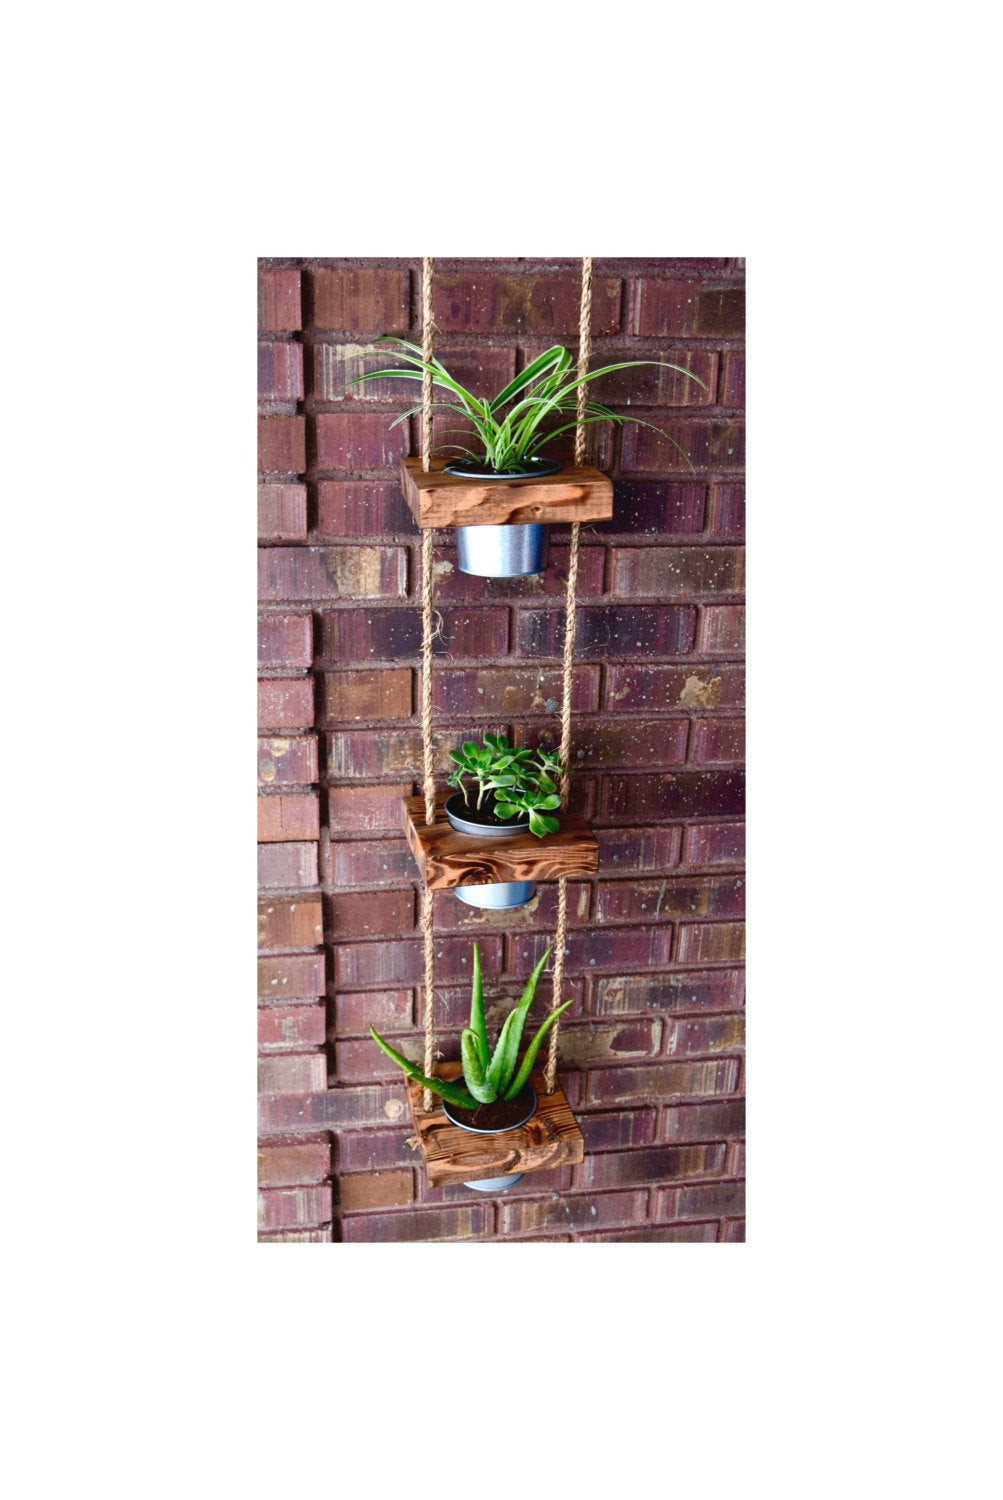 Best ideas about Hanging Planter Indoor
. Save or Pin Hanging planter indoor planter succulent by JuniperWoodshop Now.